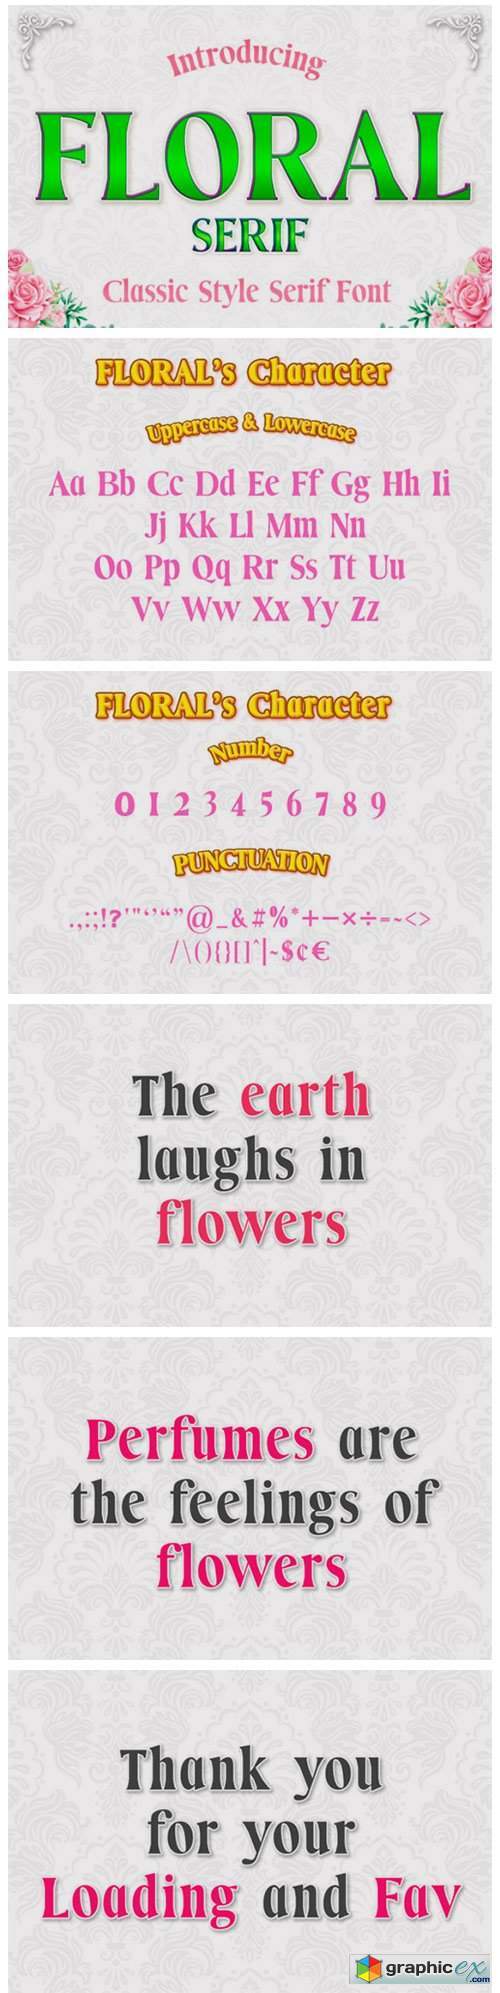 Floral Serif Font